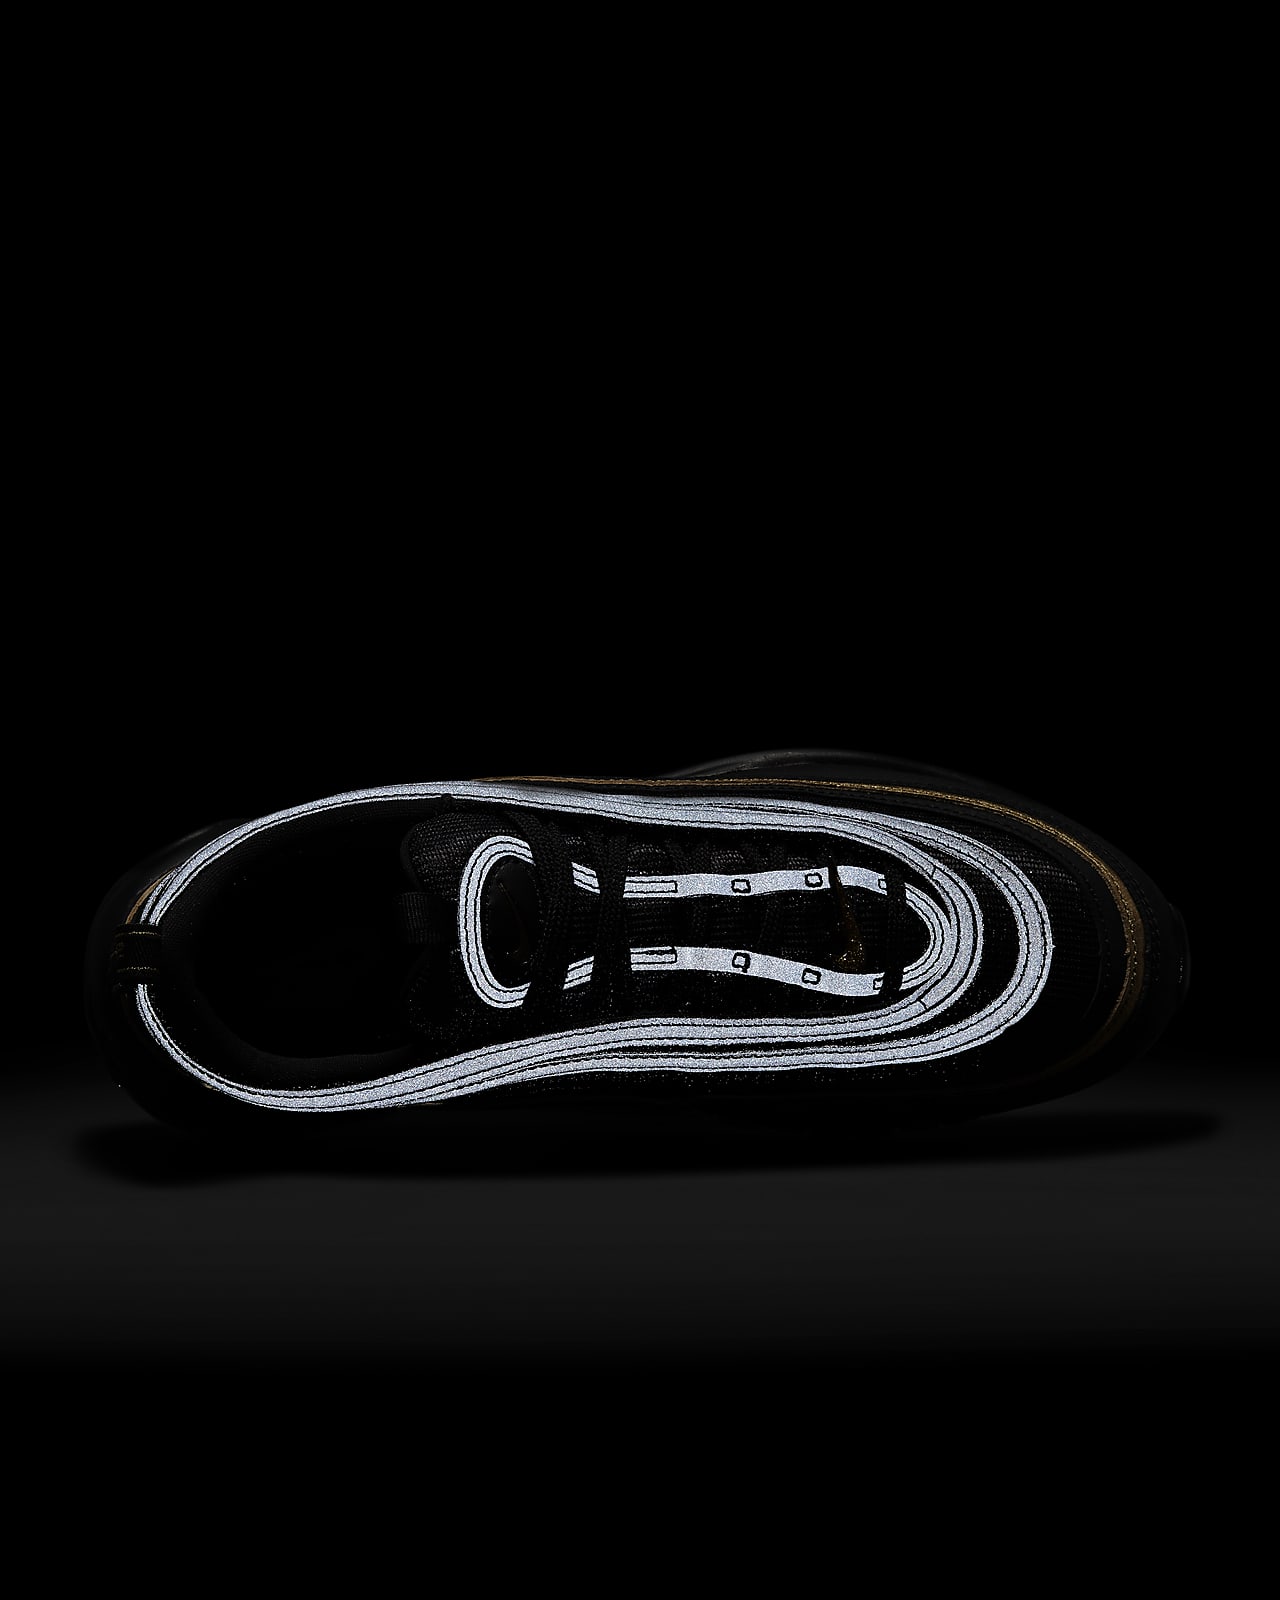 Nike Men's Air Max 97 SE Shoes